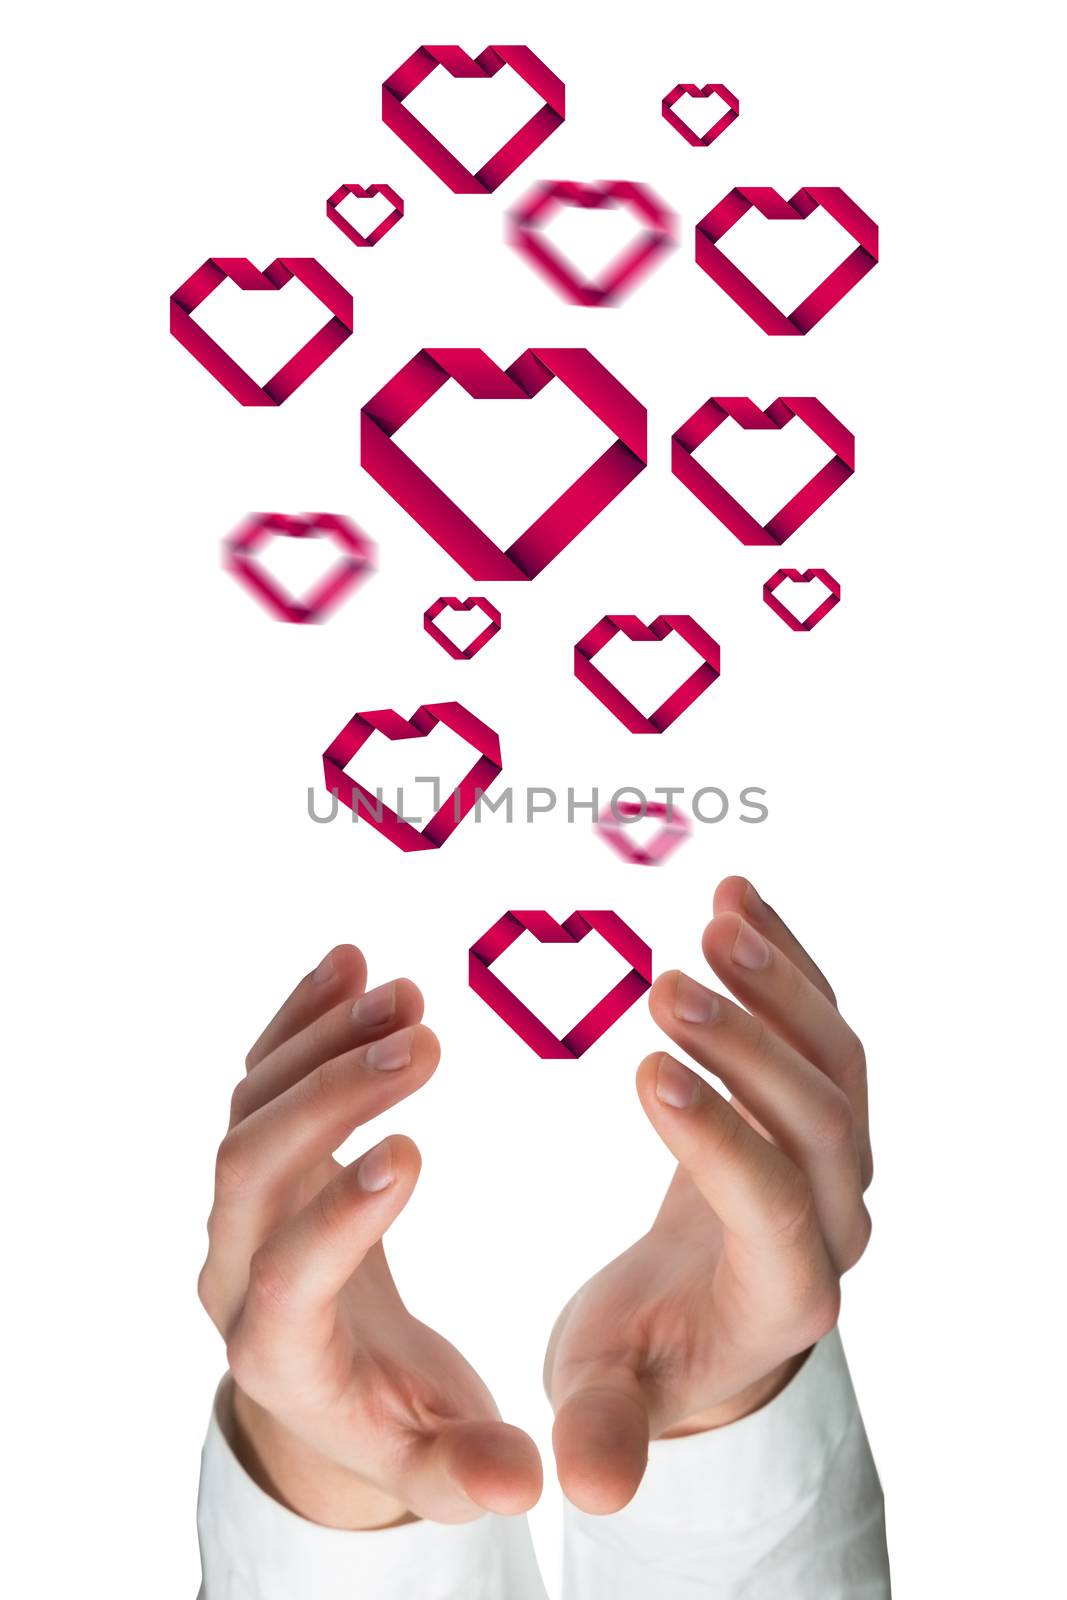 Hands holding against heart